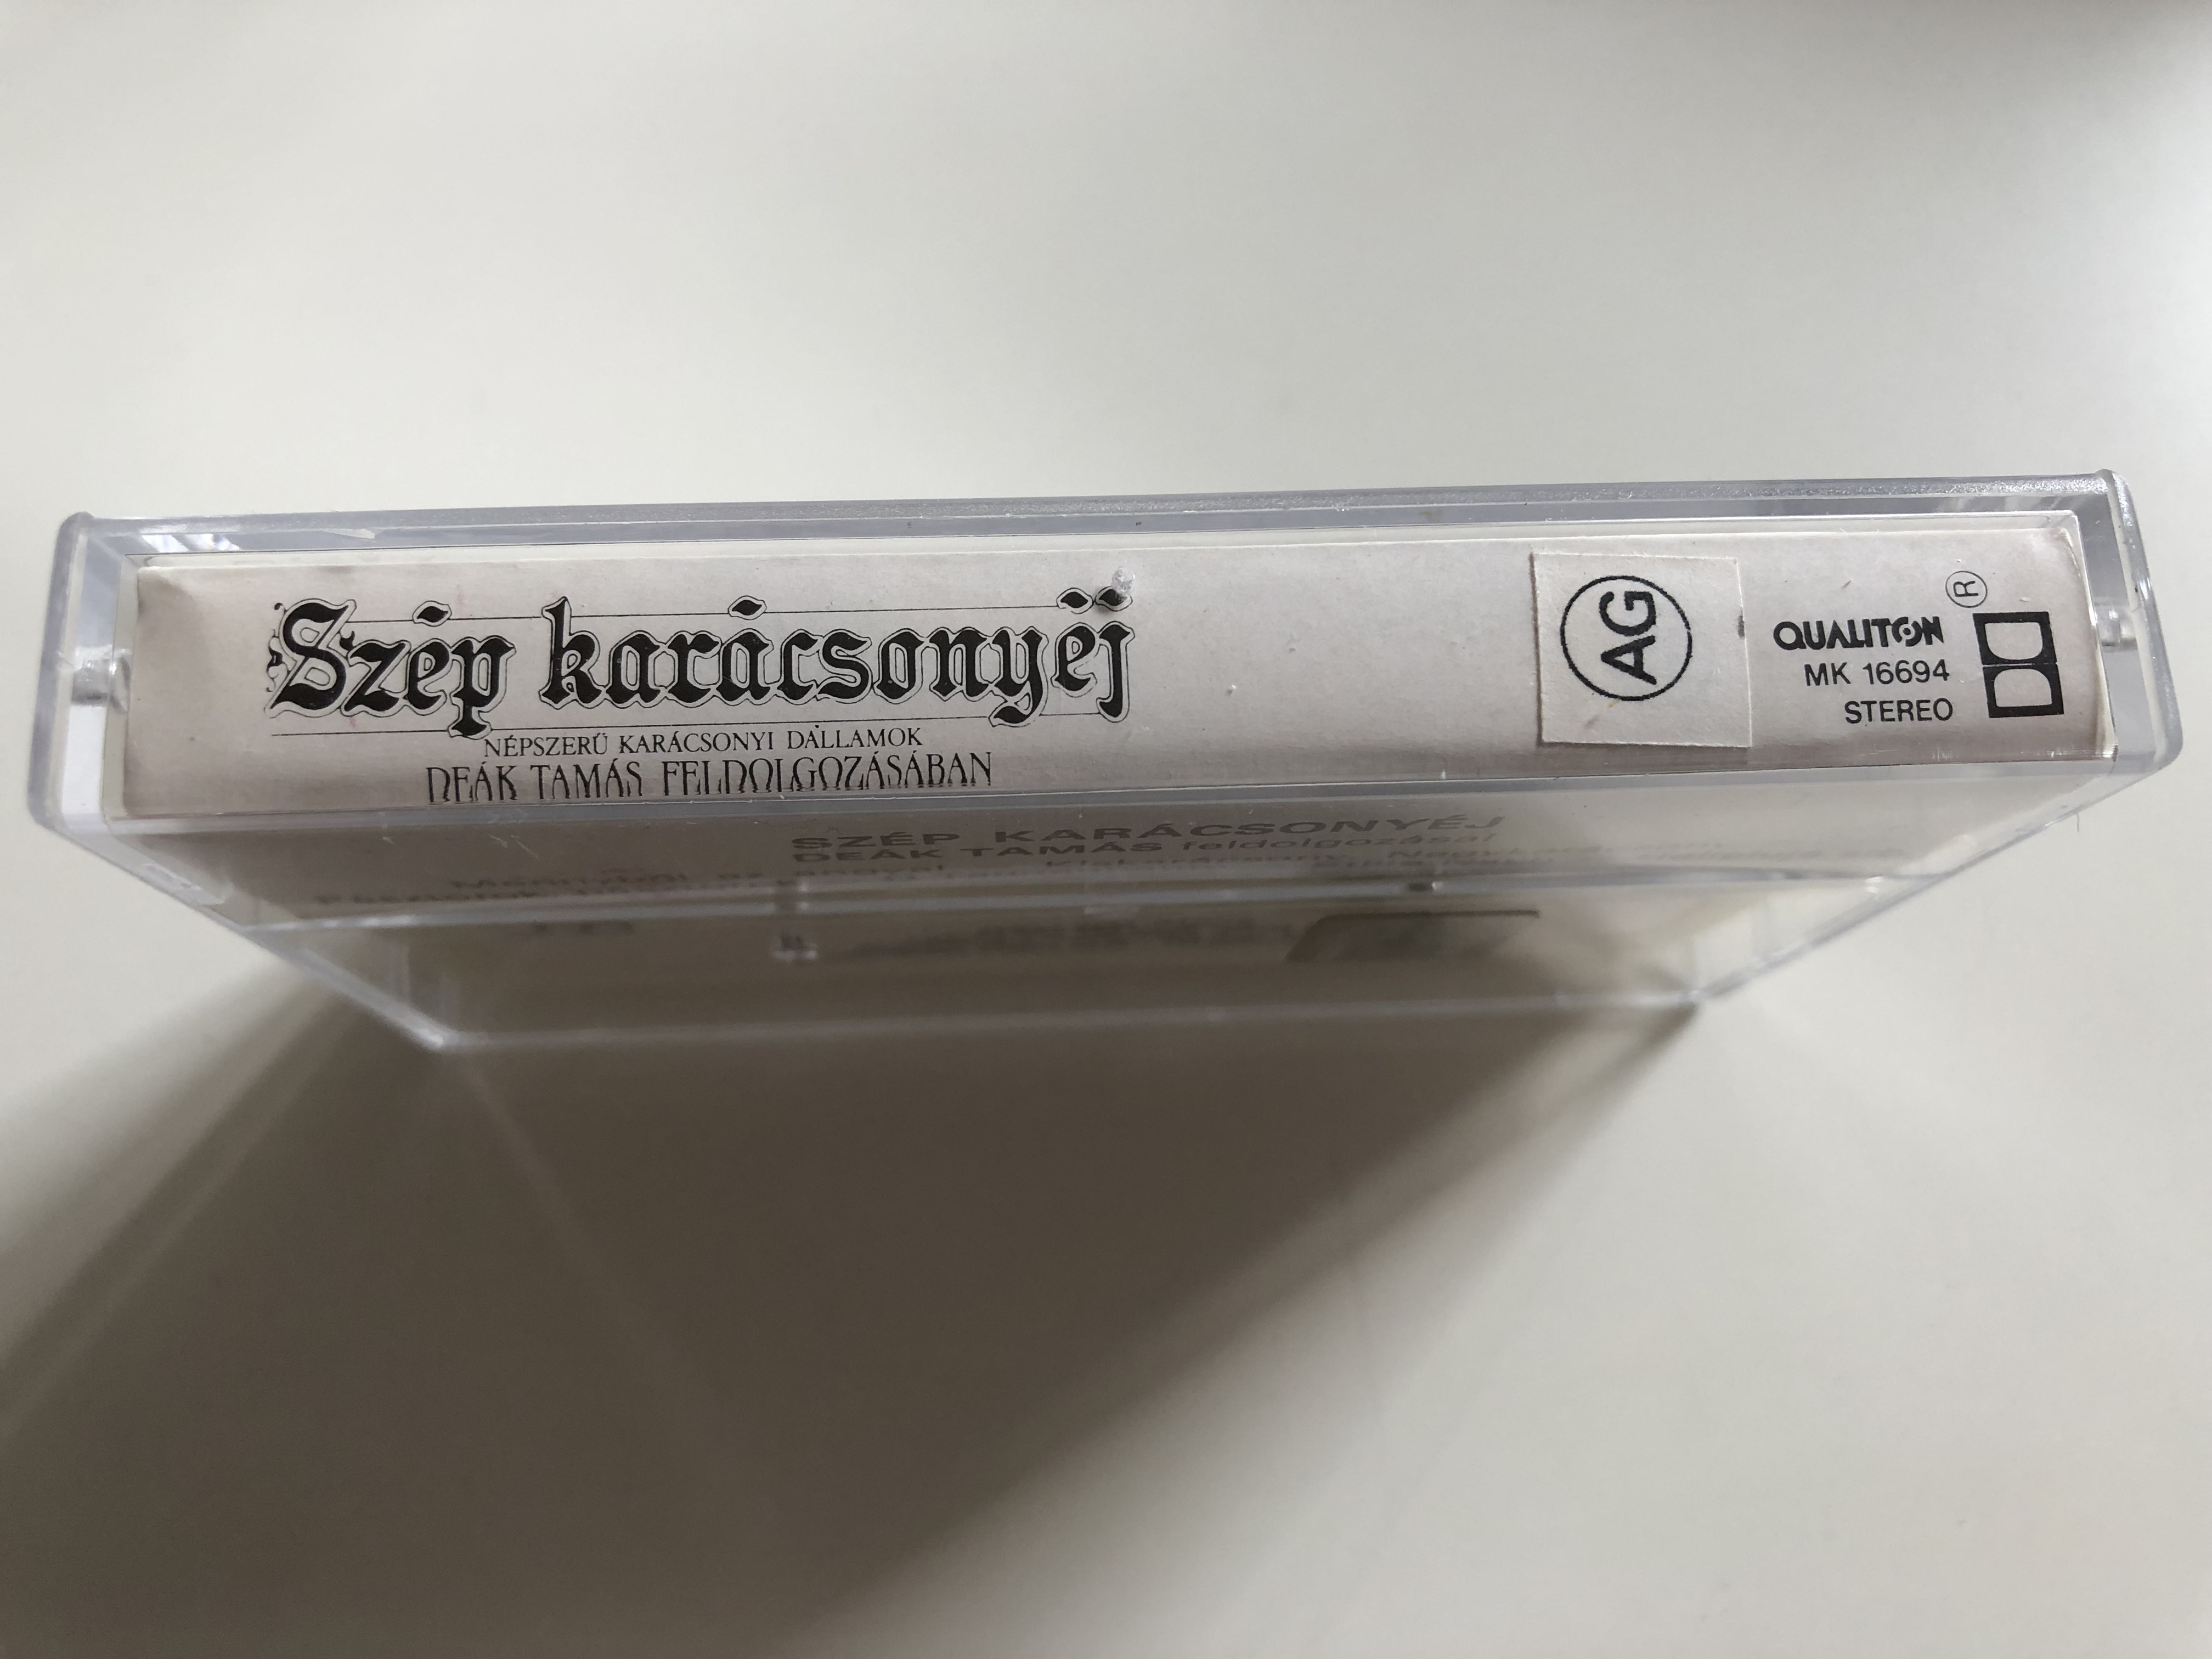 sz-p-kar-csony-j-nepszeru-karacsonyi-dallamok-de-k-tam-s-feldolgozasaban-qualiton-cassette-stereo-mk-16694-5-.jpg